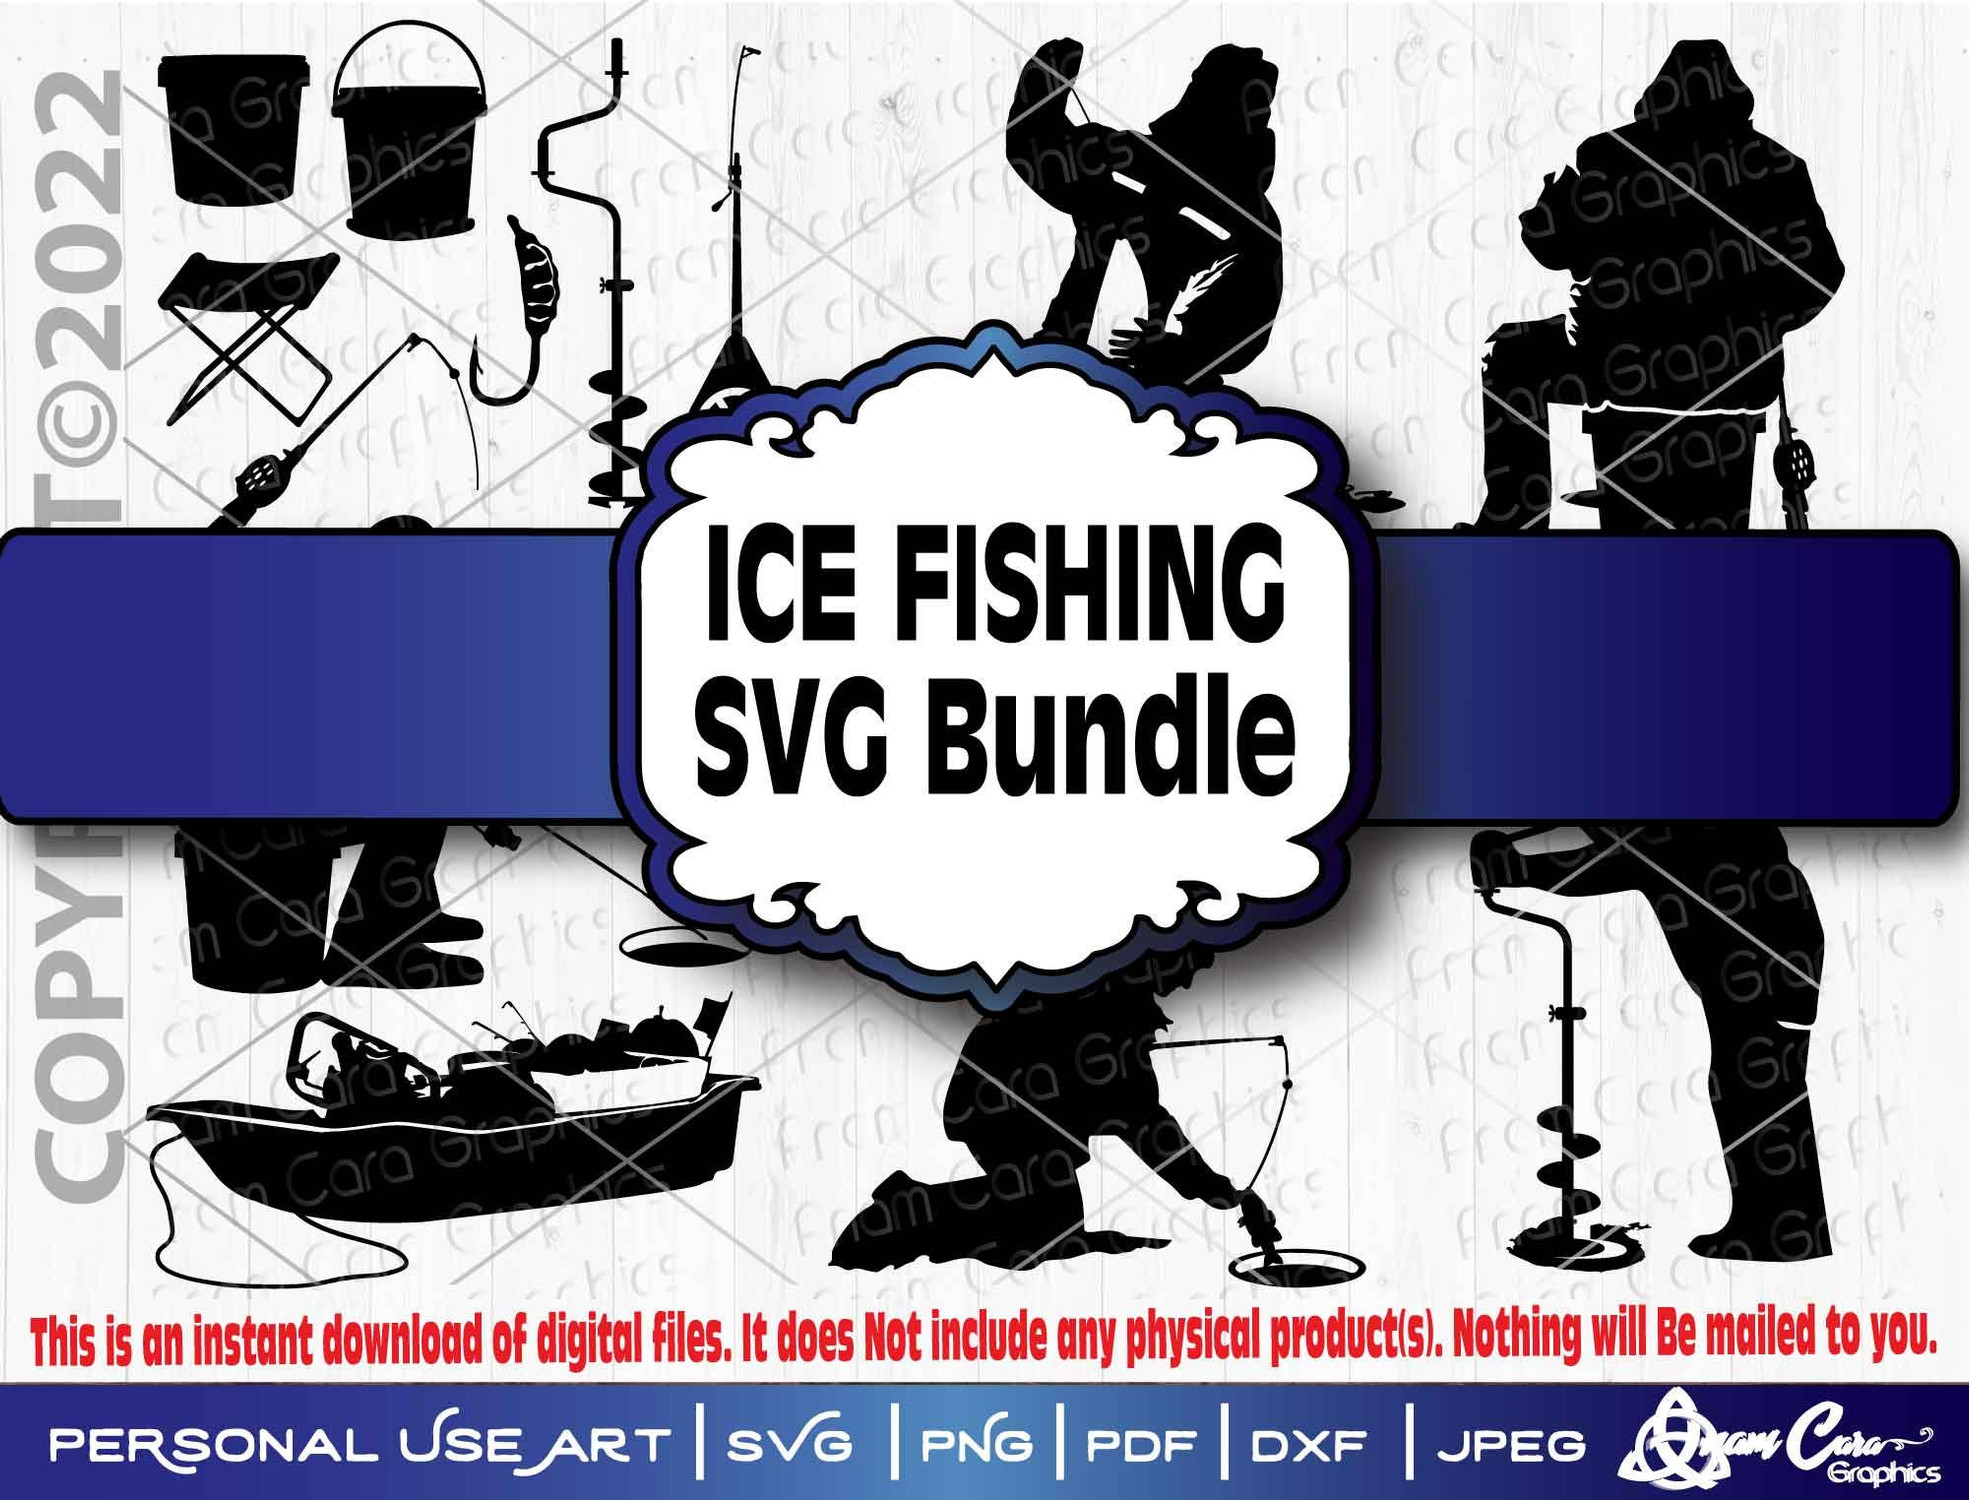 Ice Fishing SVG Bundle - Digital Designs Cut or Print, SVG Cut or Print  Art